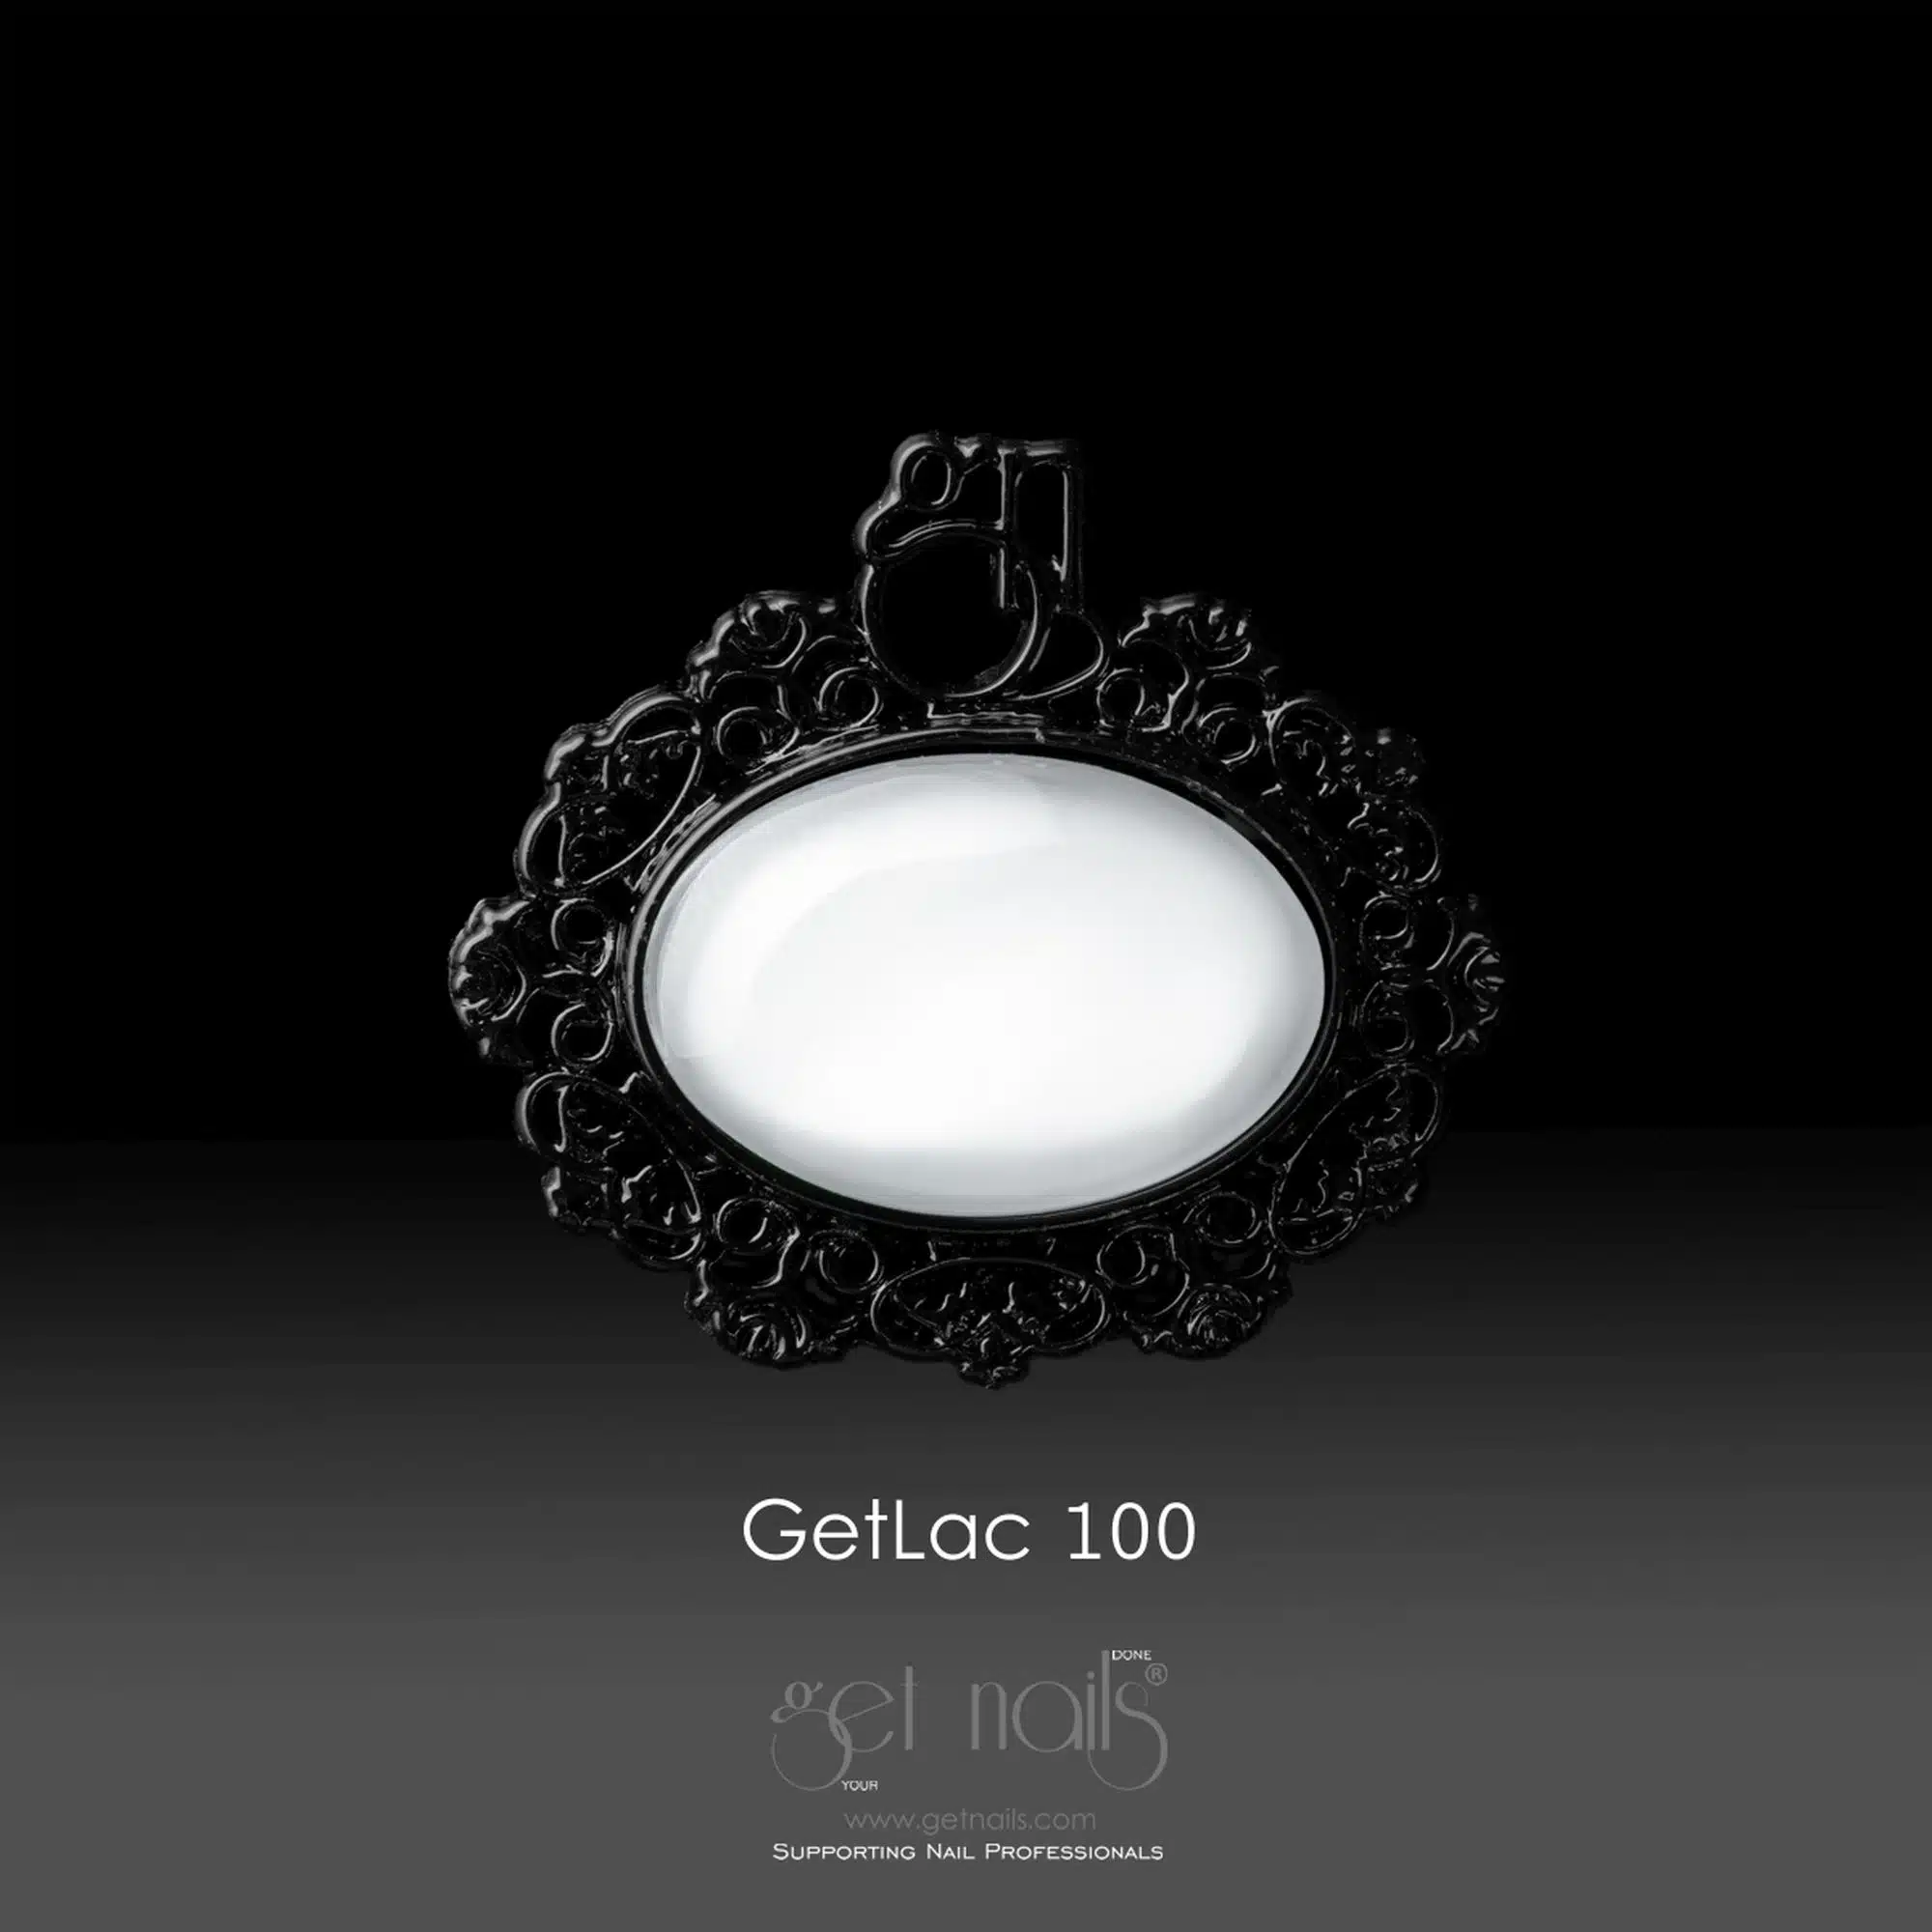 Get Nails Austria - GetLac 100 Белый 15г